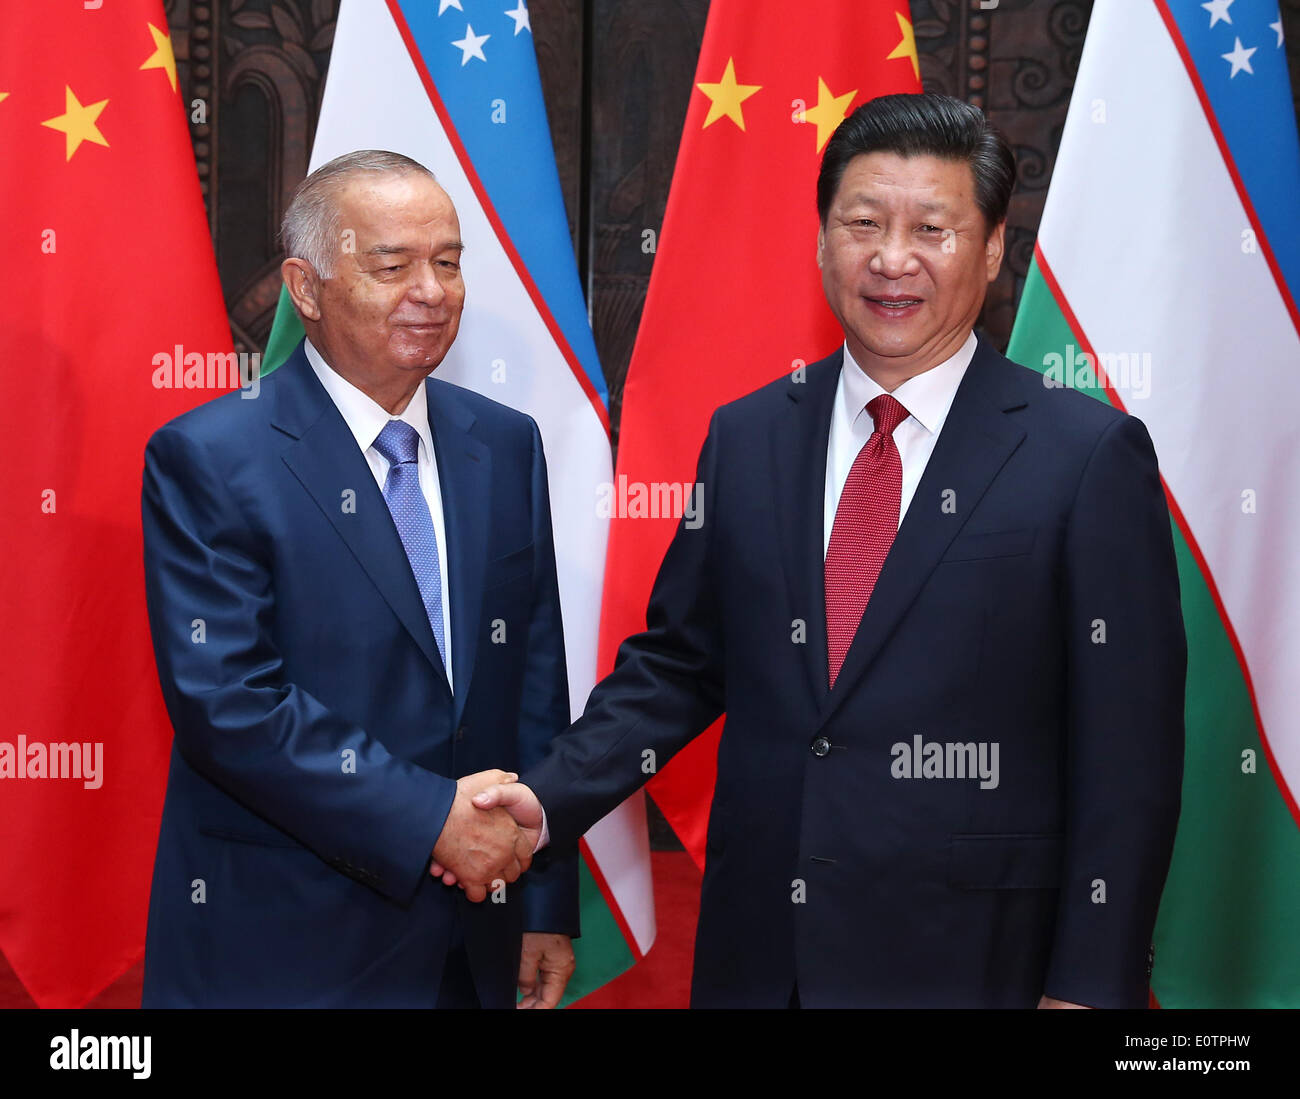 Shanghai, China. 20th May, 2014. Chinese President Xi Jinping (R) meets with Uzbekistan's President Islam Karimov in Shanghai, east China, May 20, 2014. © Pang Xinglei/Xinhua/Alamy Live News Stock Photo